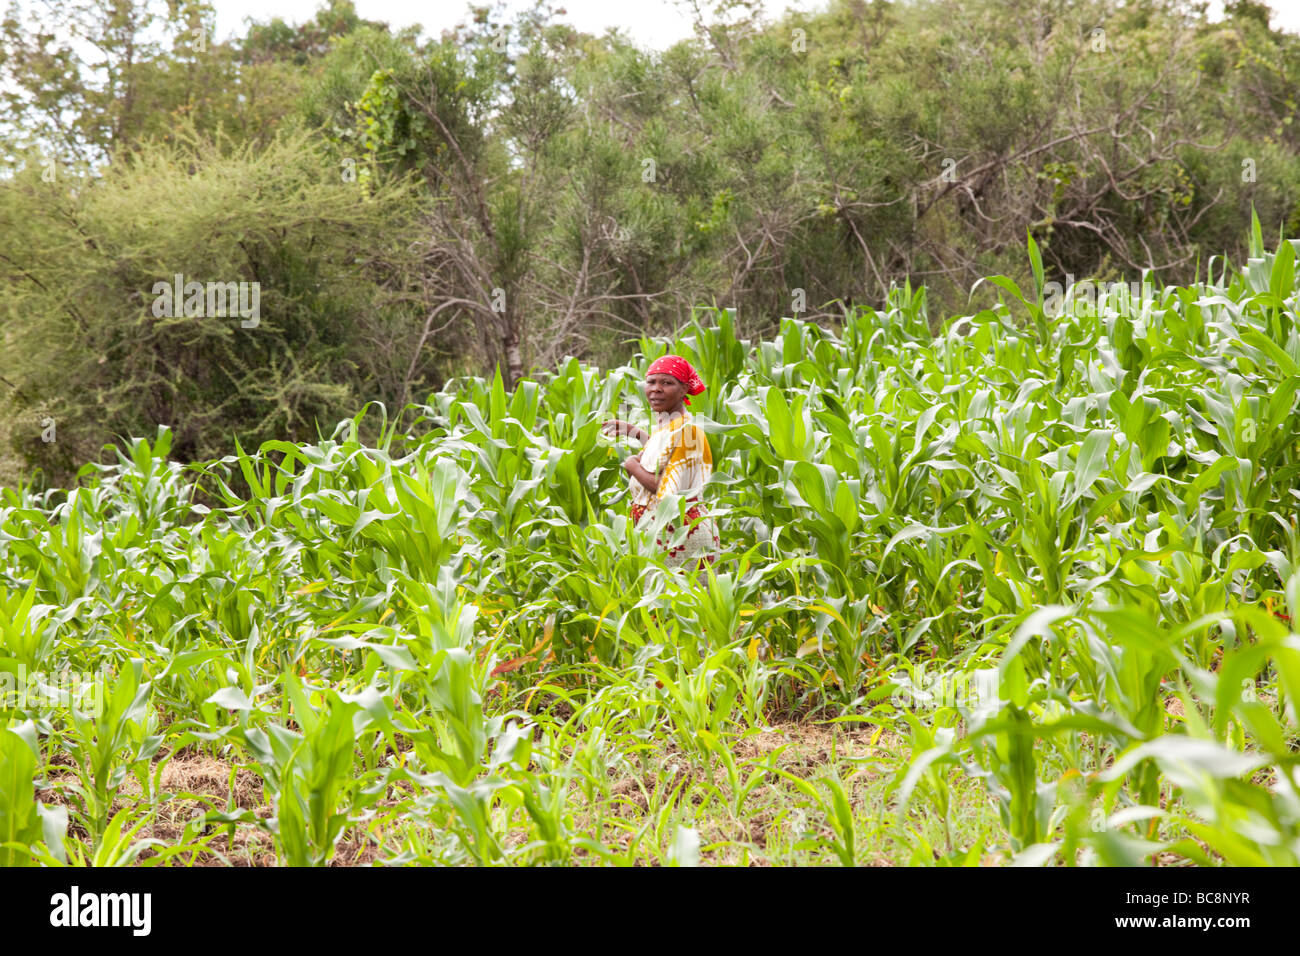 Female African farmer working in a field of Maize. Kikwe Village Arumeru District Arusha Tanzania Stock Photo